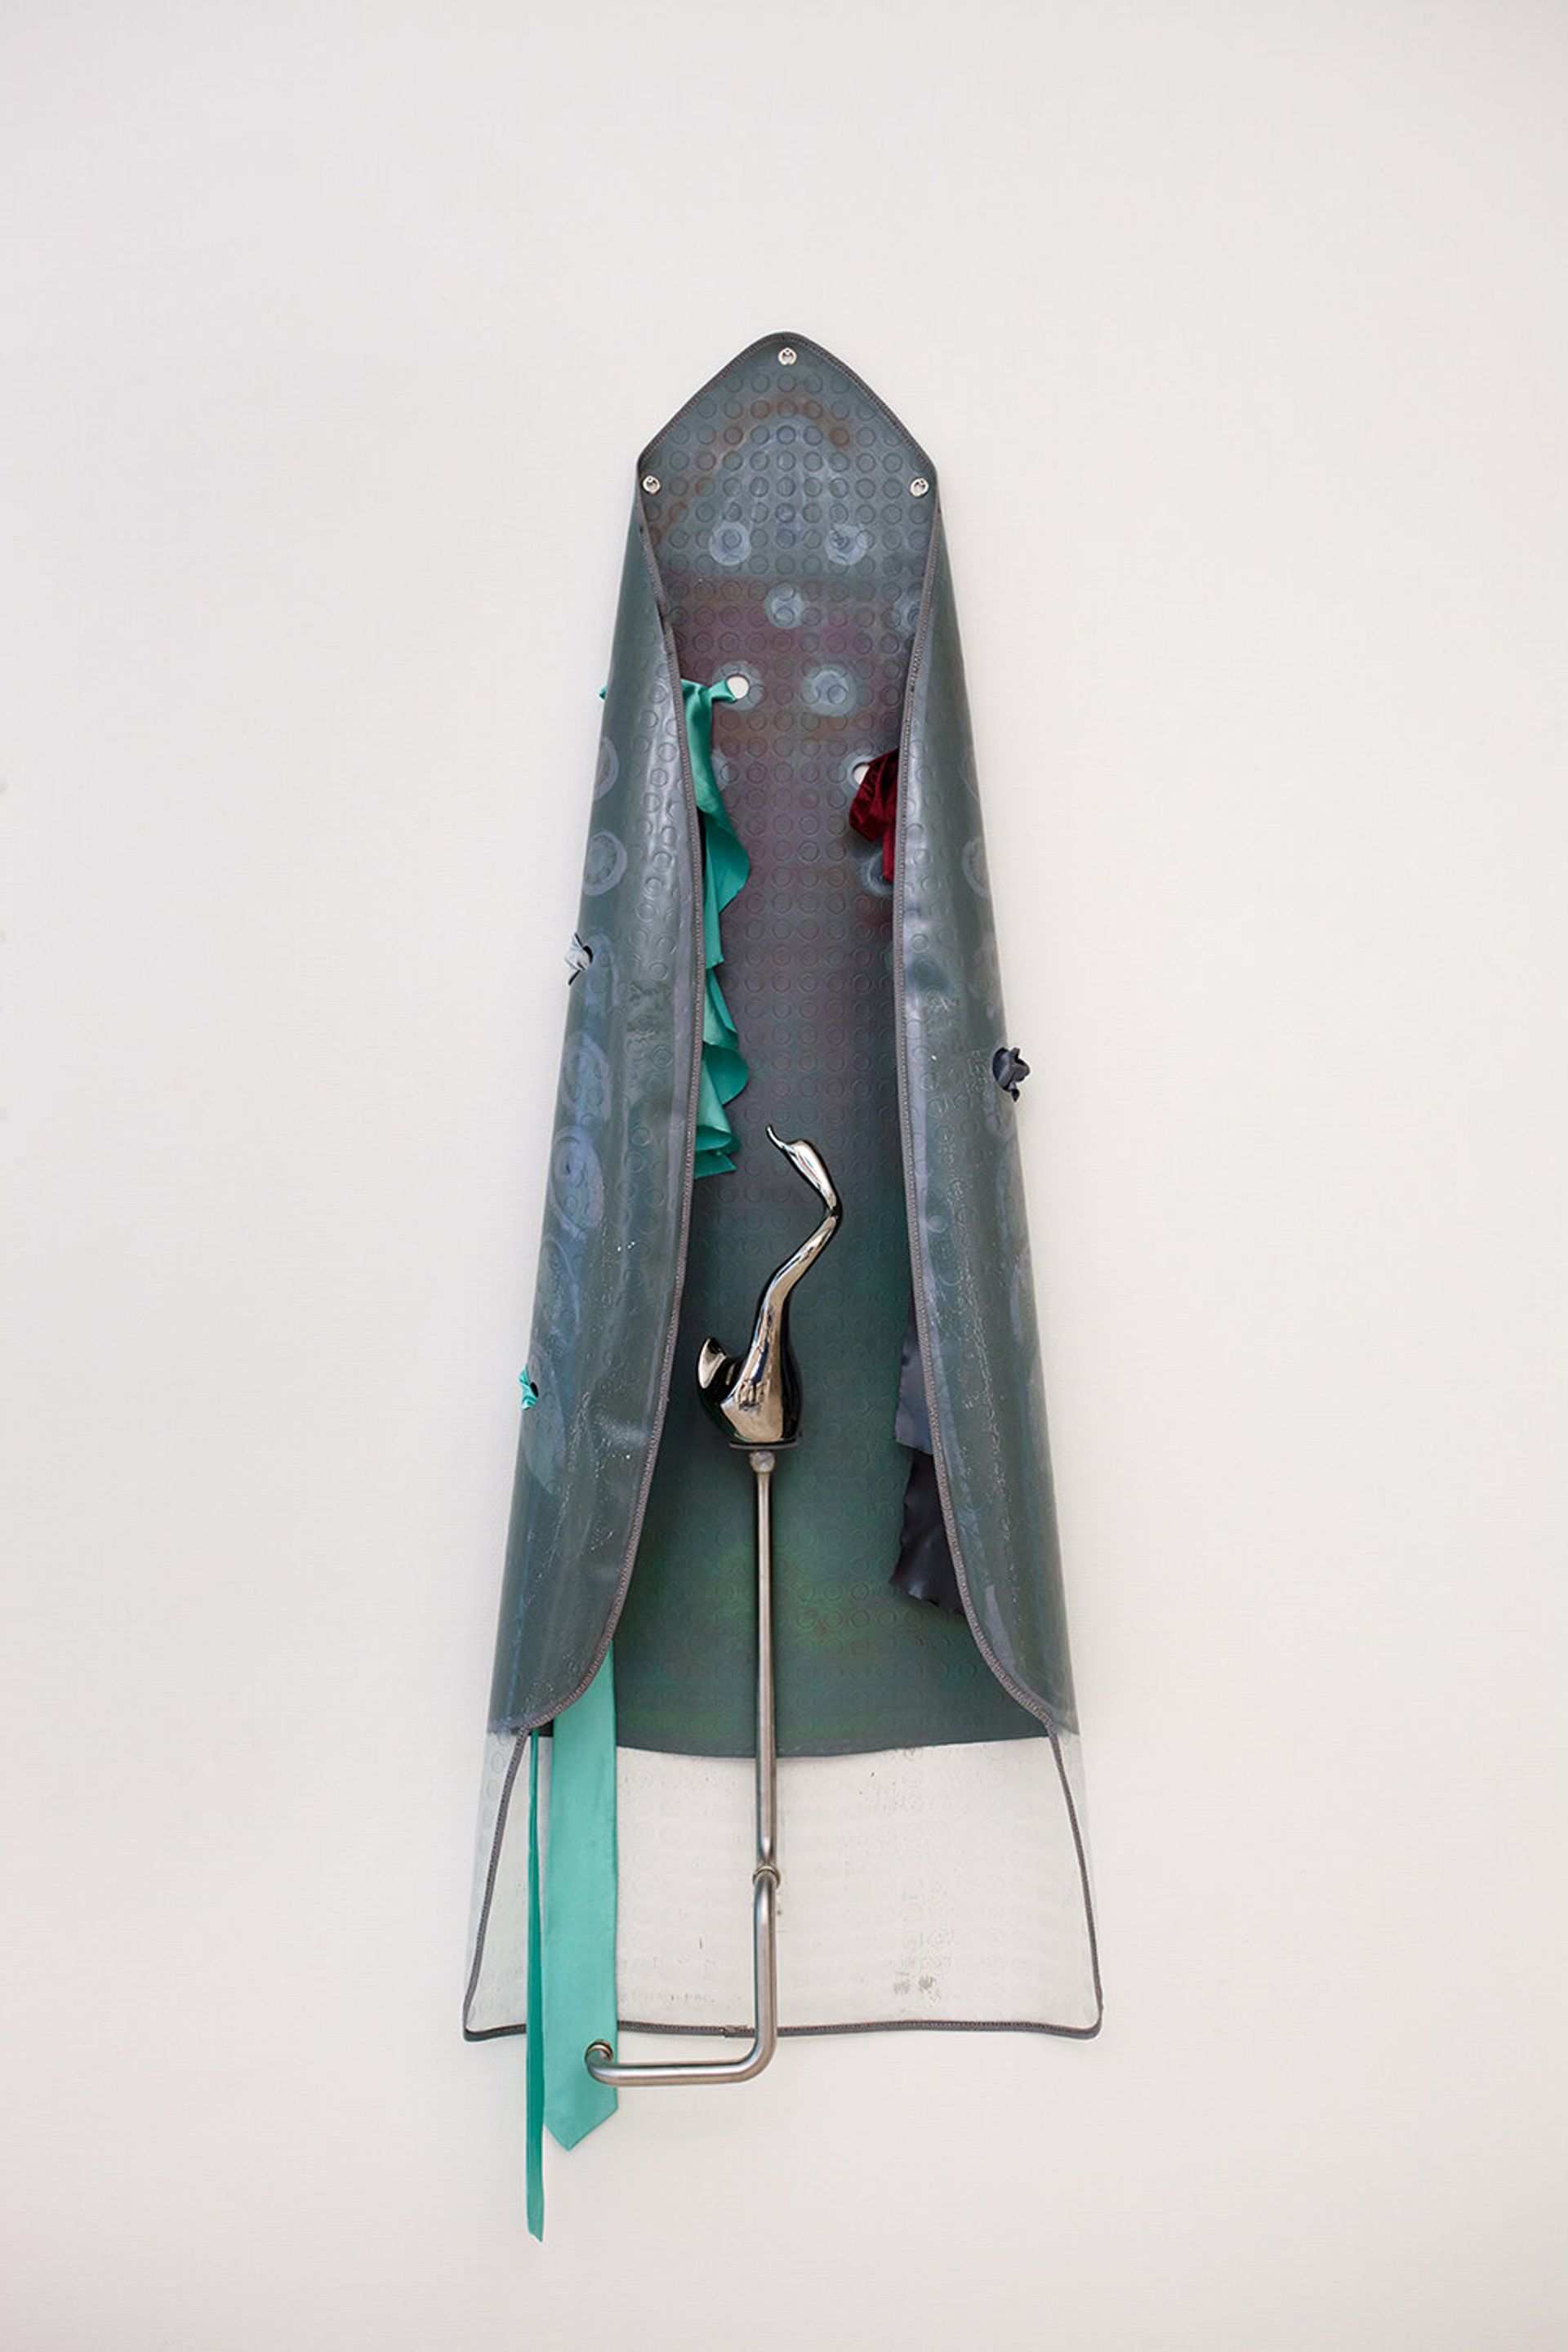 Ana Navas, Iron, 2018, pvc, acrylic, metal, textile, ceramic, 195 × 65 cm